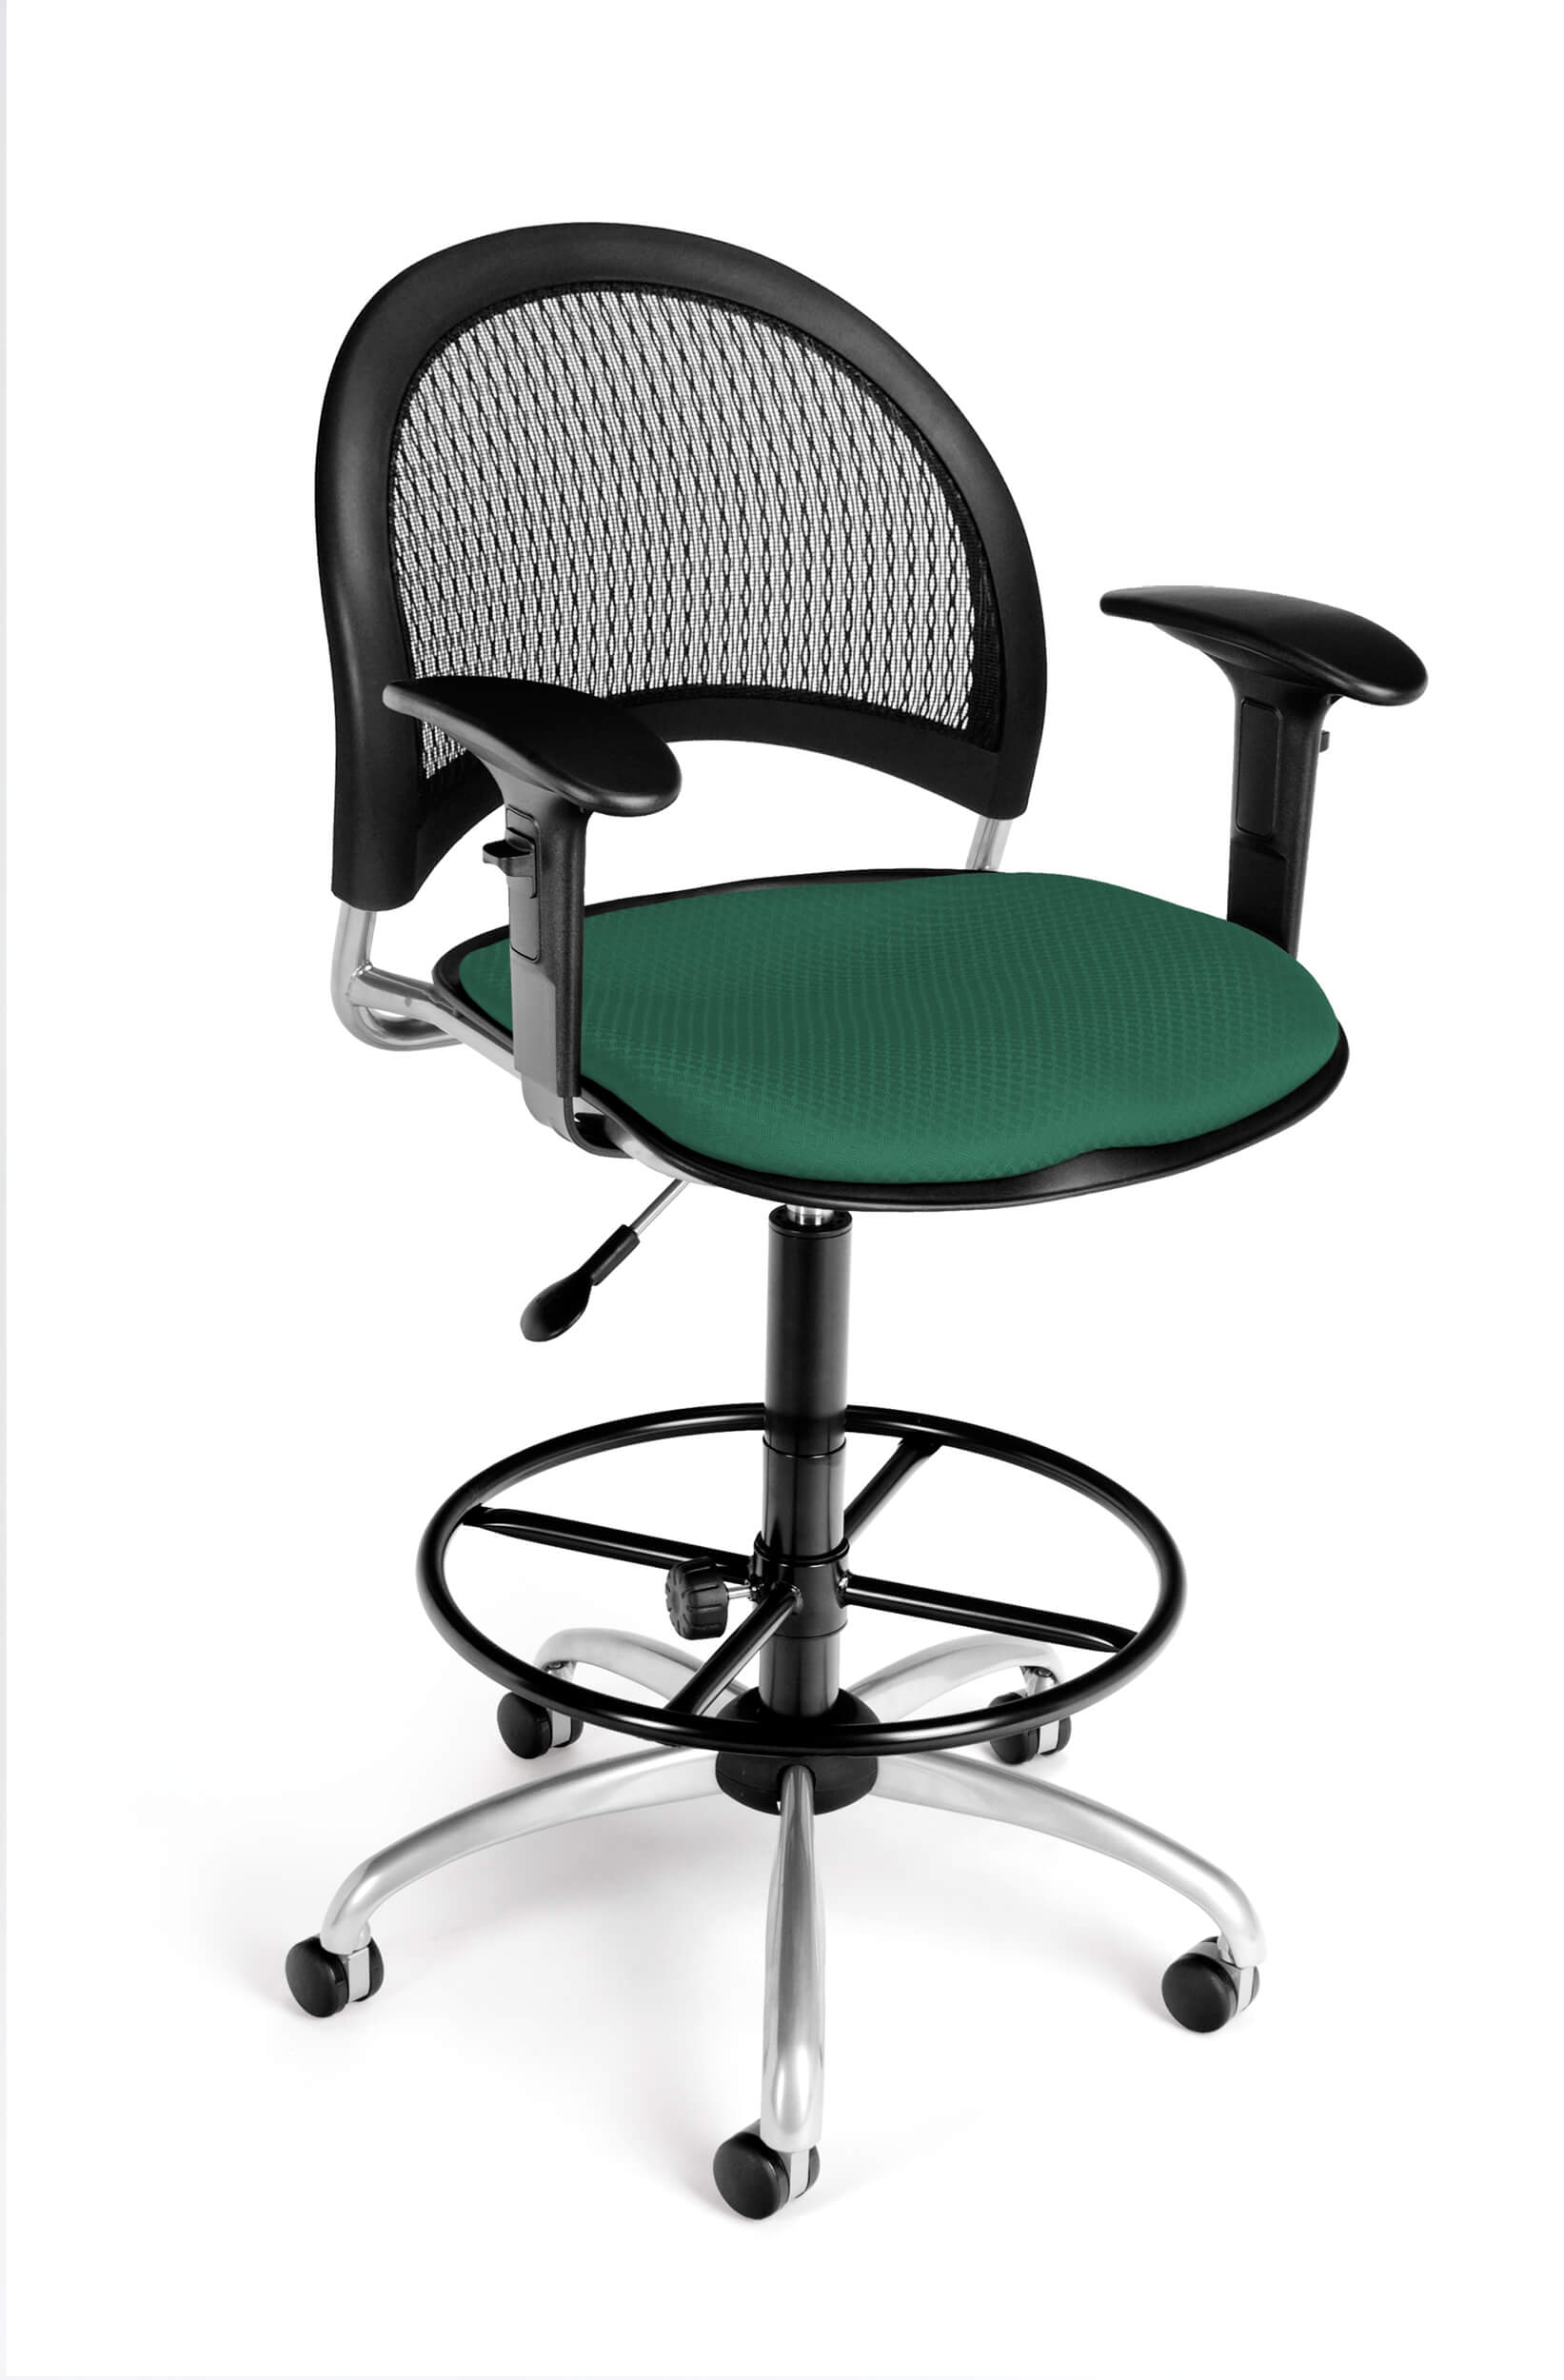 Cool desk chairs CUB 336 AA3 DK 2201 FMO